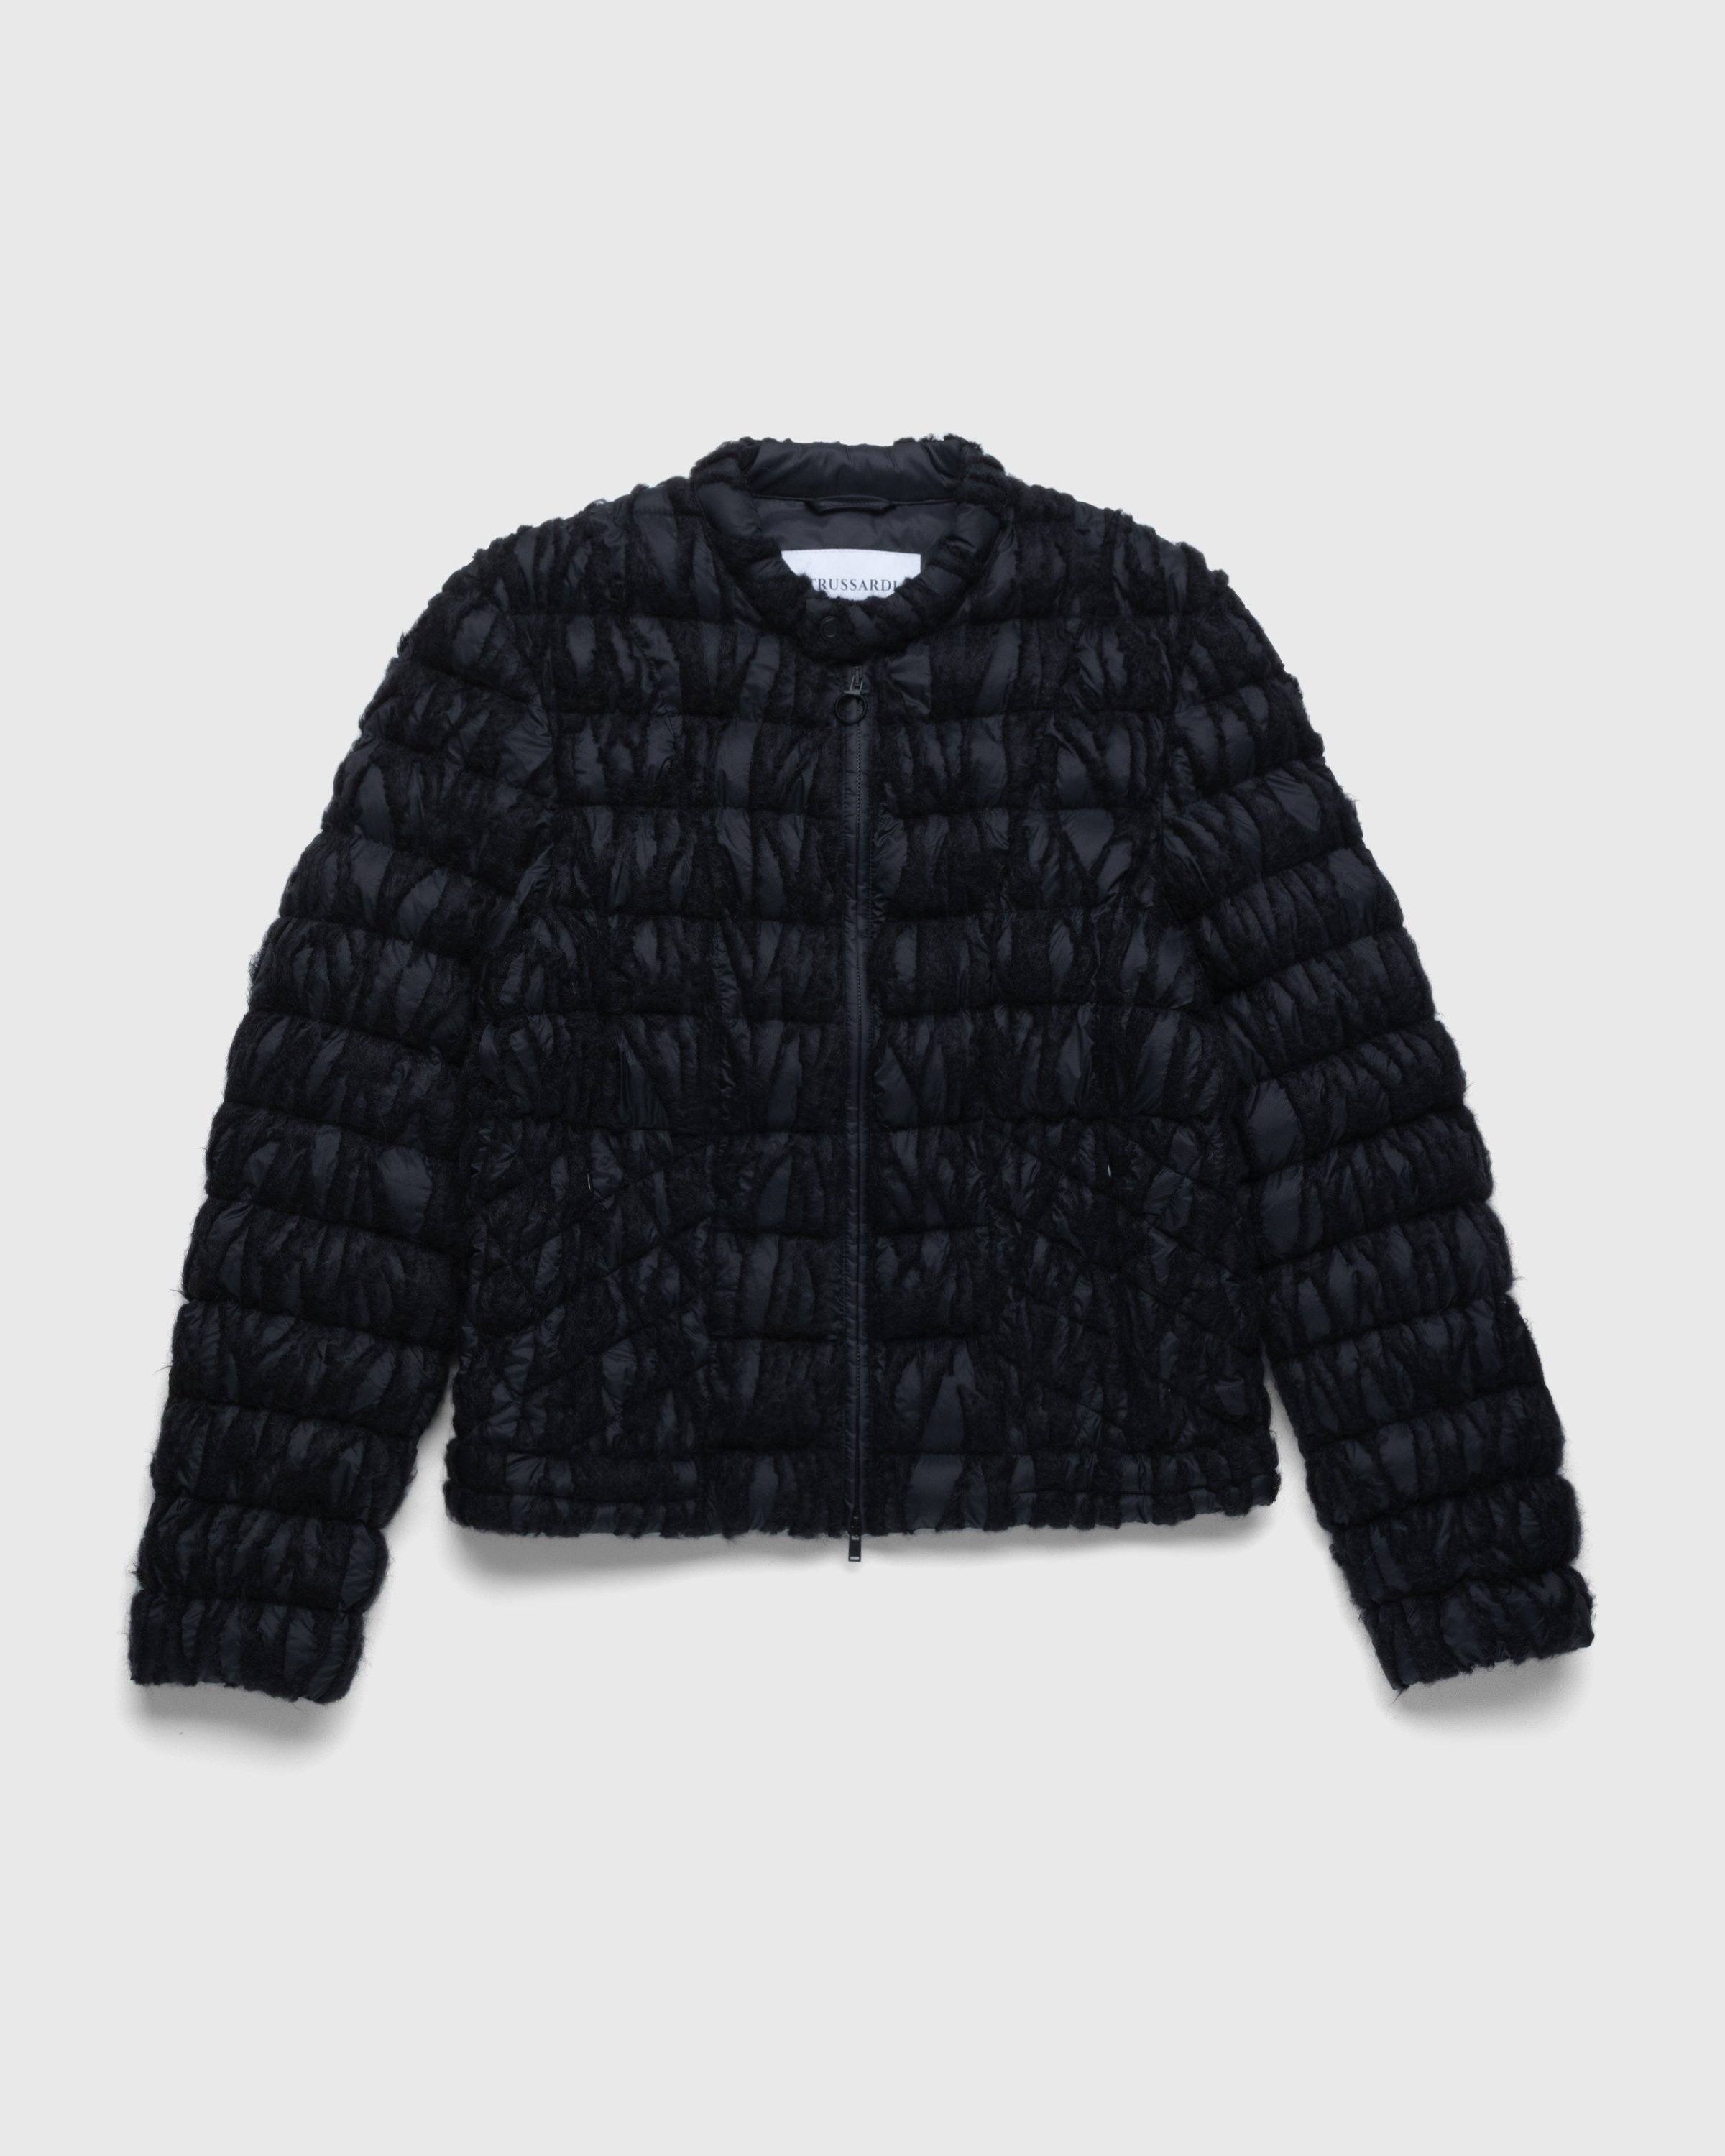 Trussardi – Embroidered Nylon Jacket Black - Down Jackets - Black - Image 1